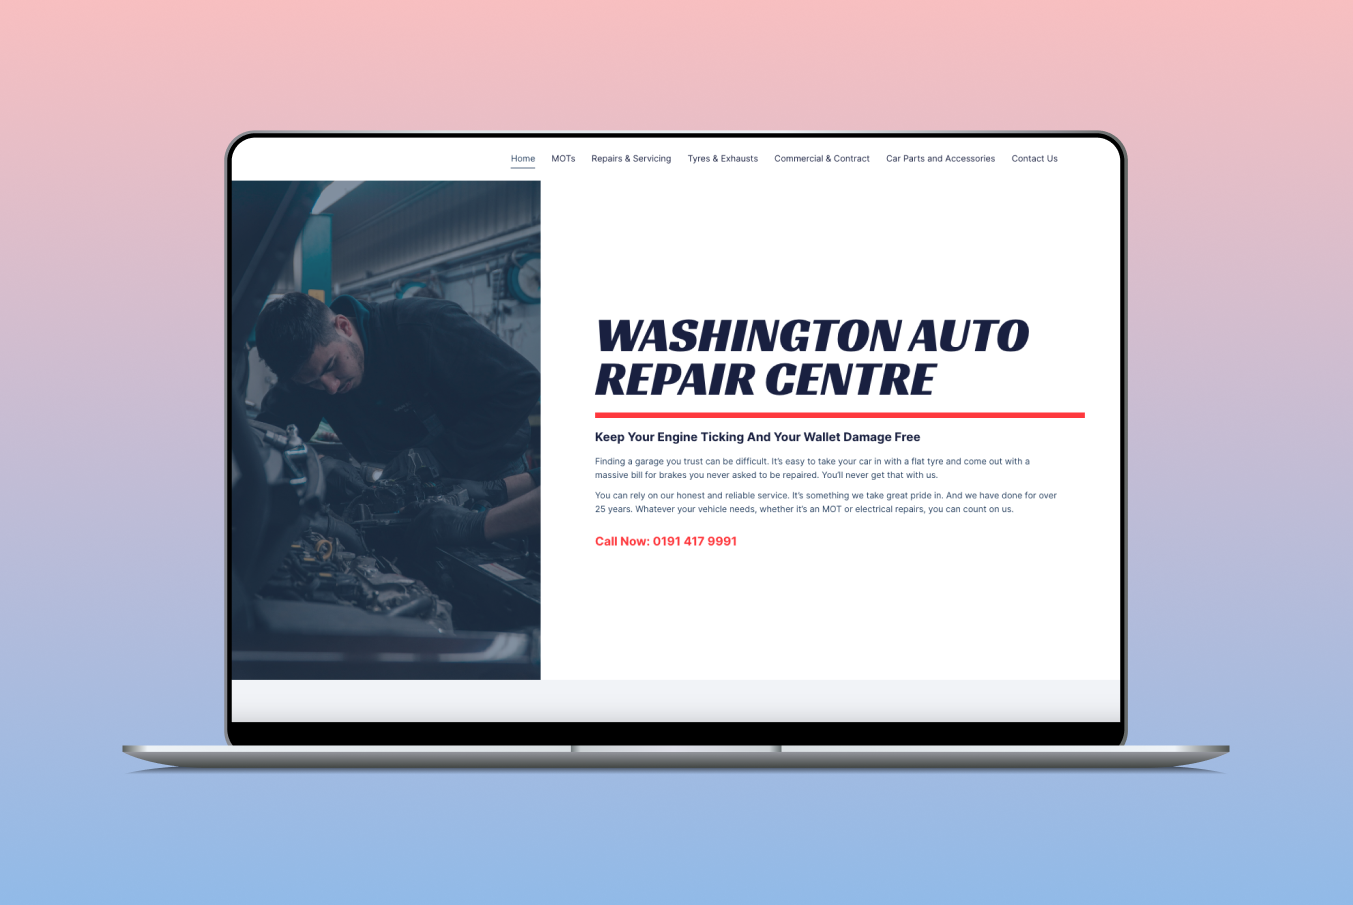 A screenshot of the Washington Auto Repair website.